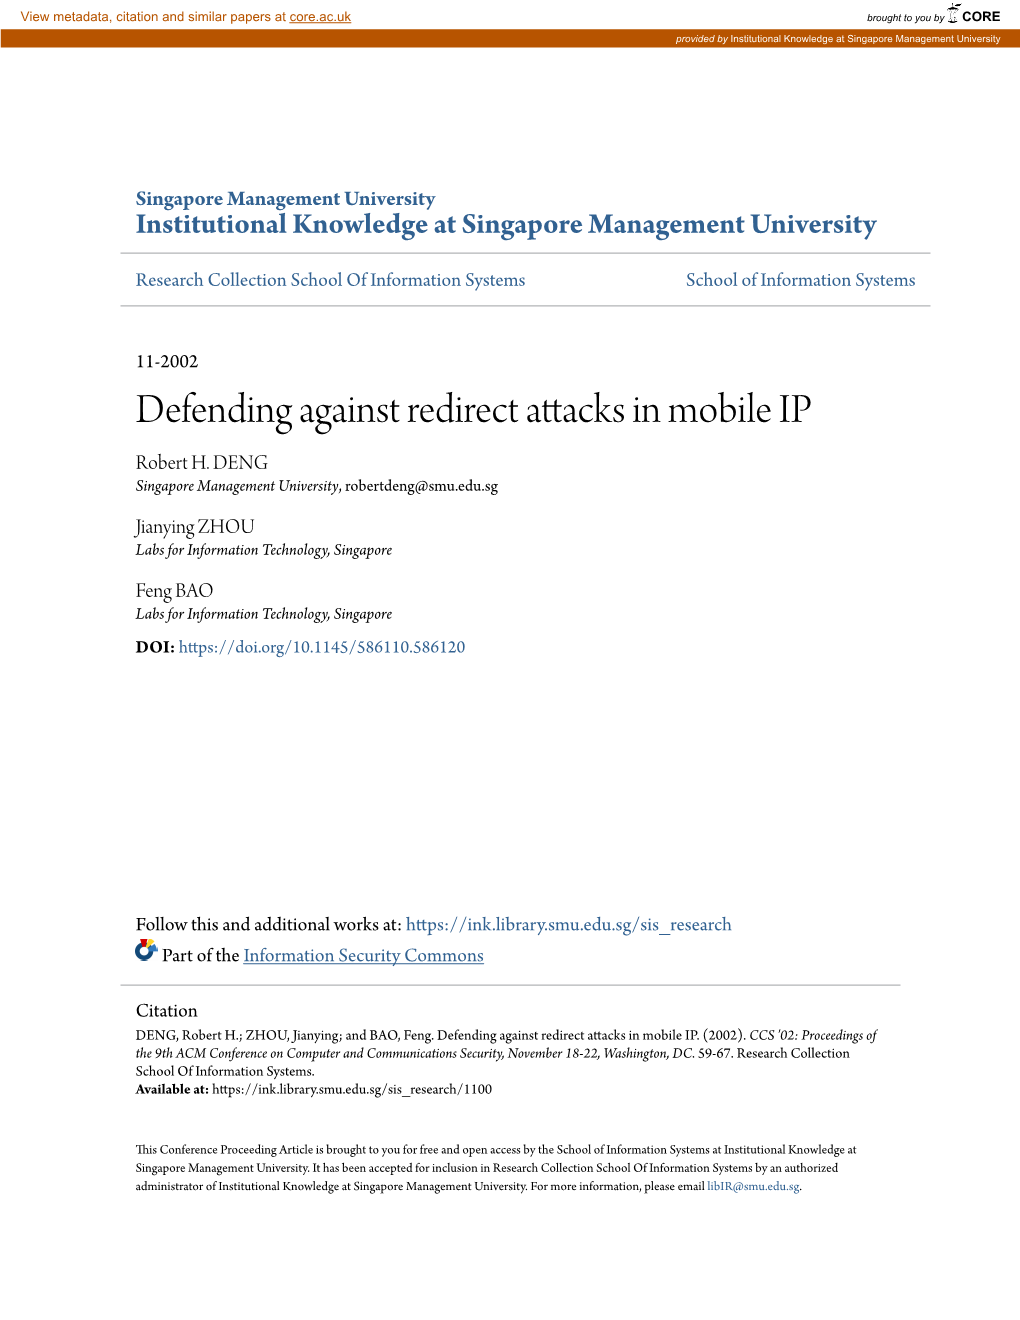 Defending Against Redirect Attacks in Mobile IP Robert H